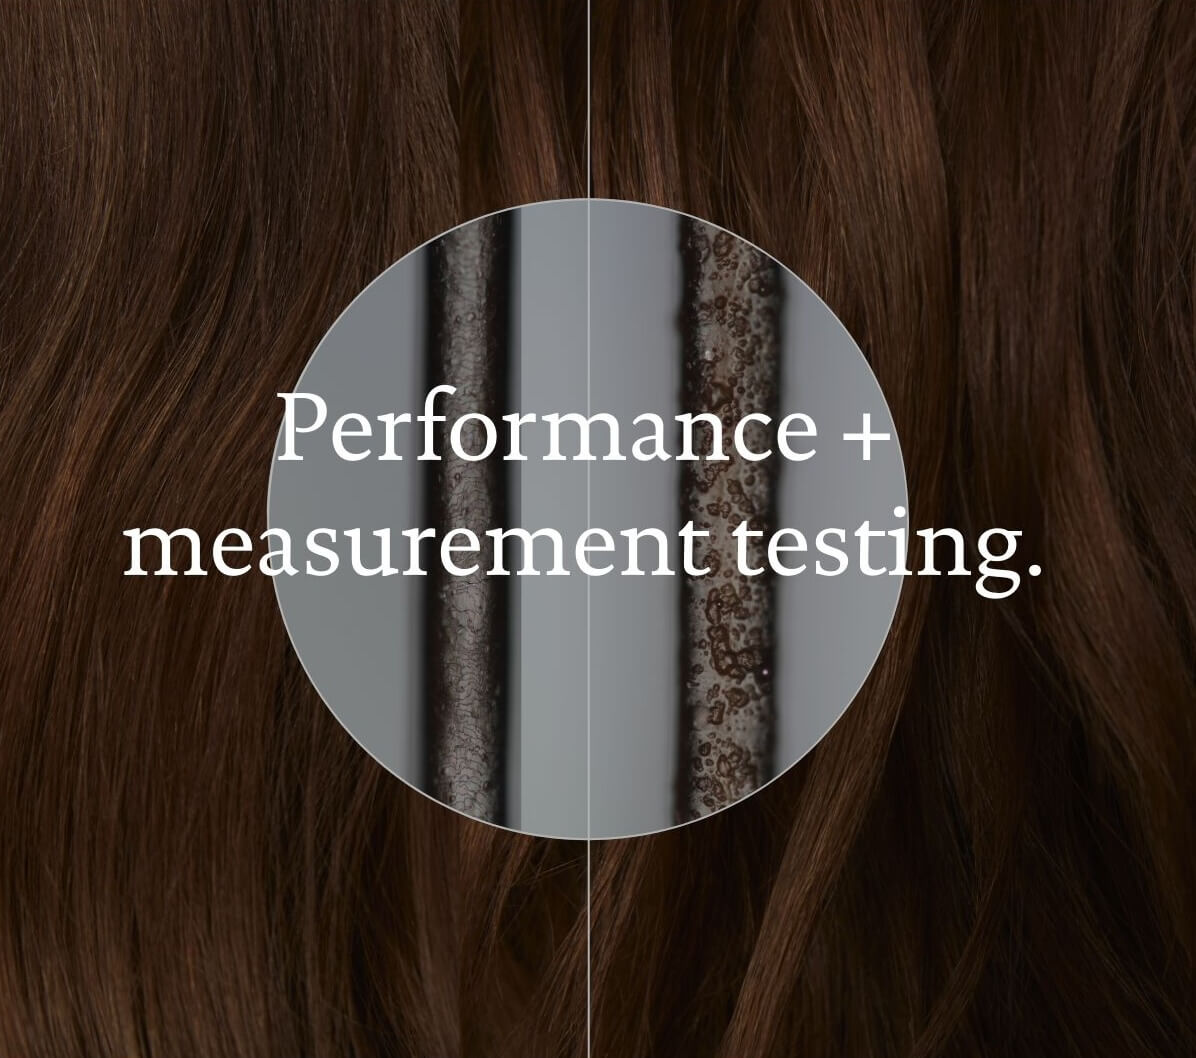 Performance + measurement testing